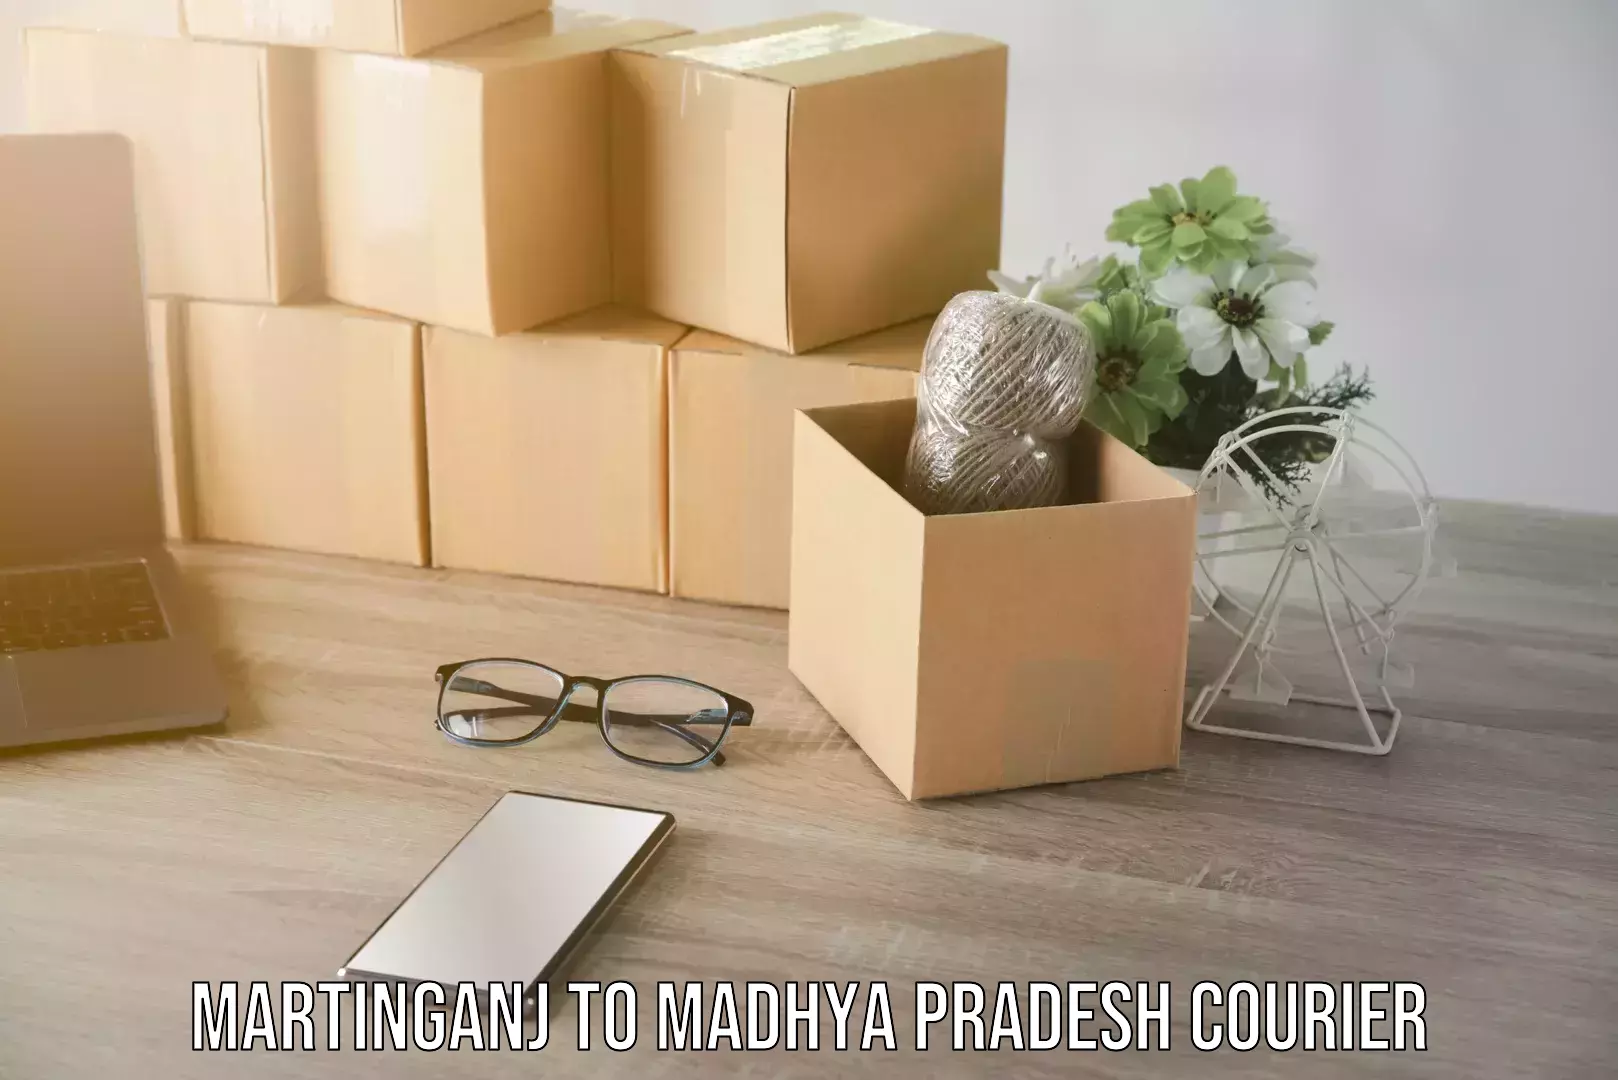 Trusted moving company Martinganj to Madhya Pradesh